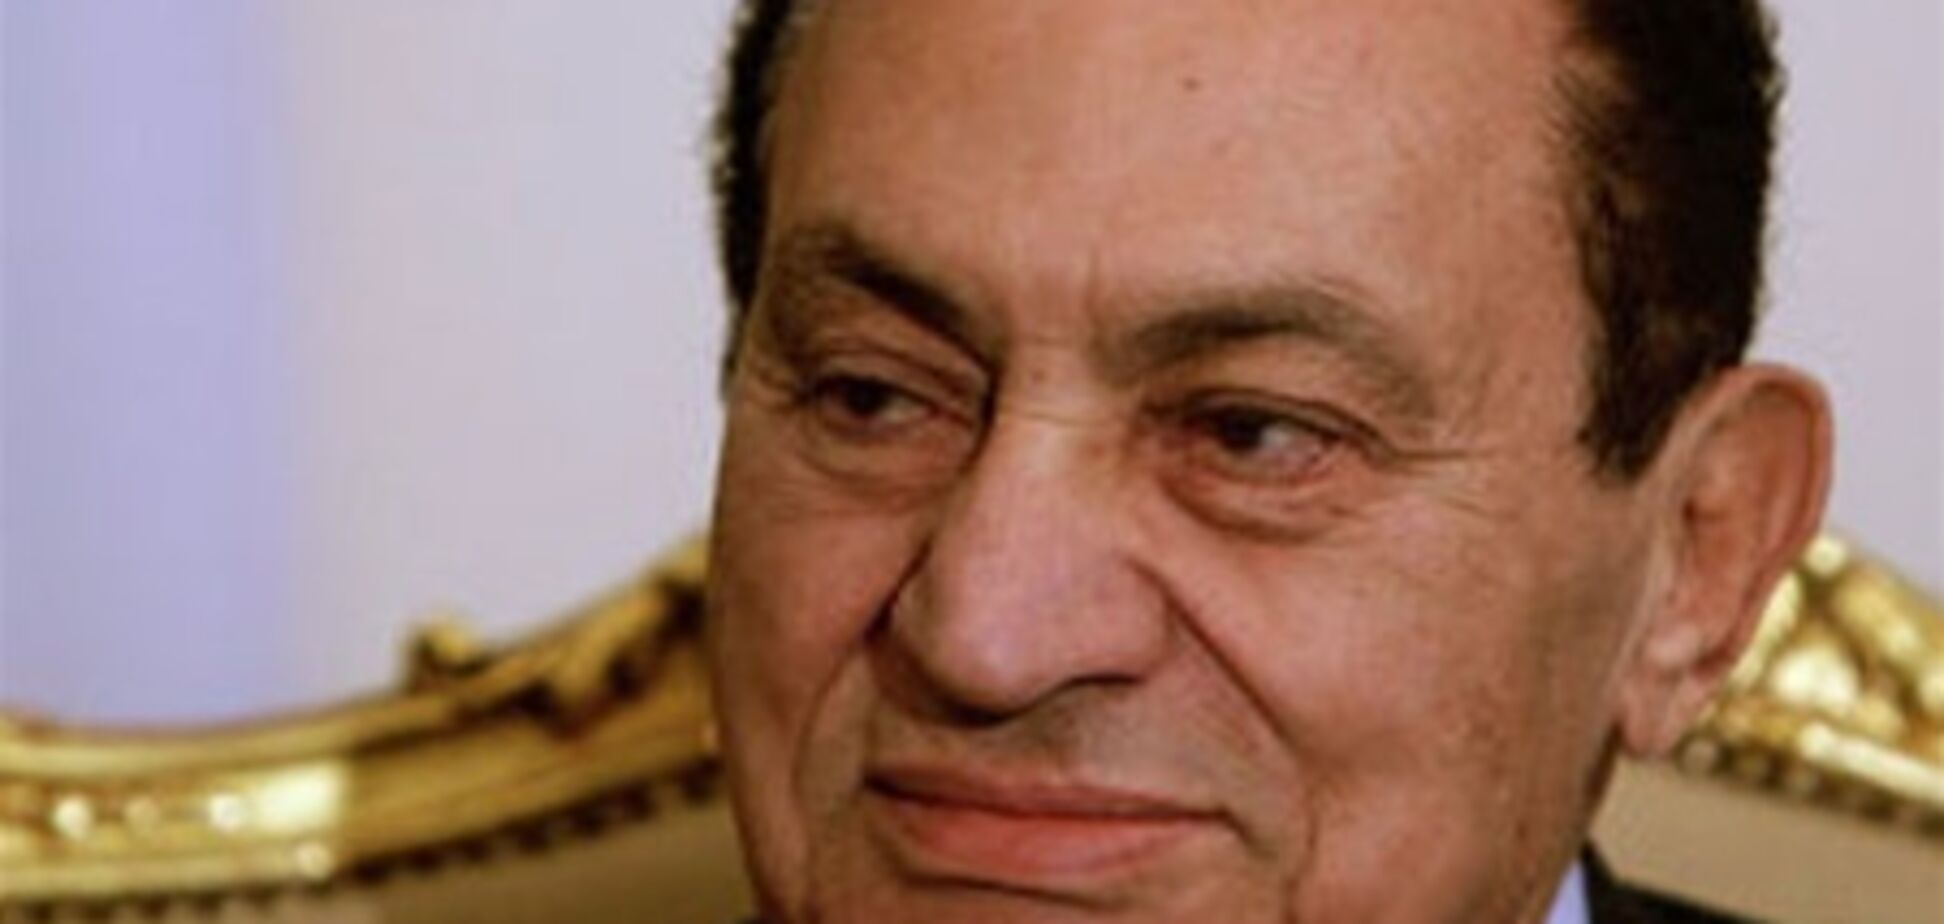 Президент Египта Хосни Мубарак подал в отставку